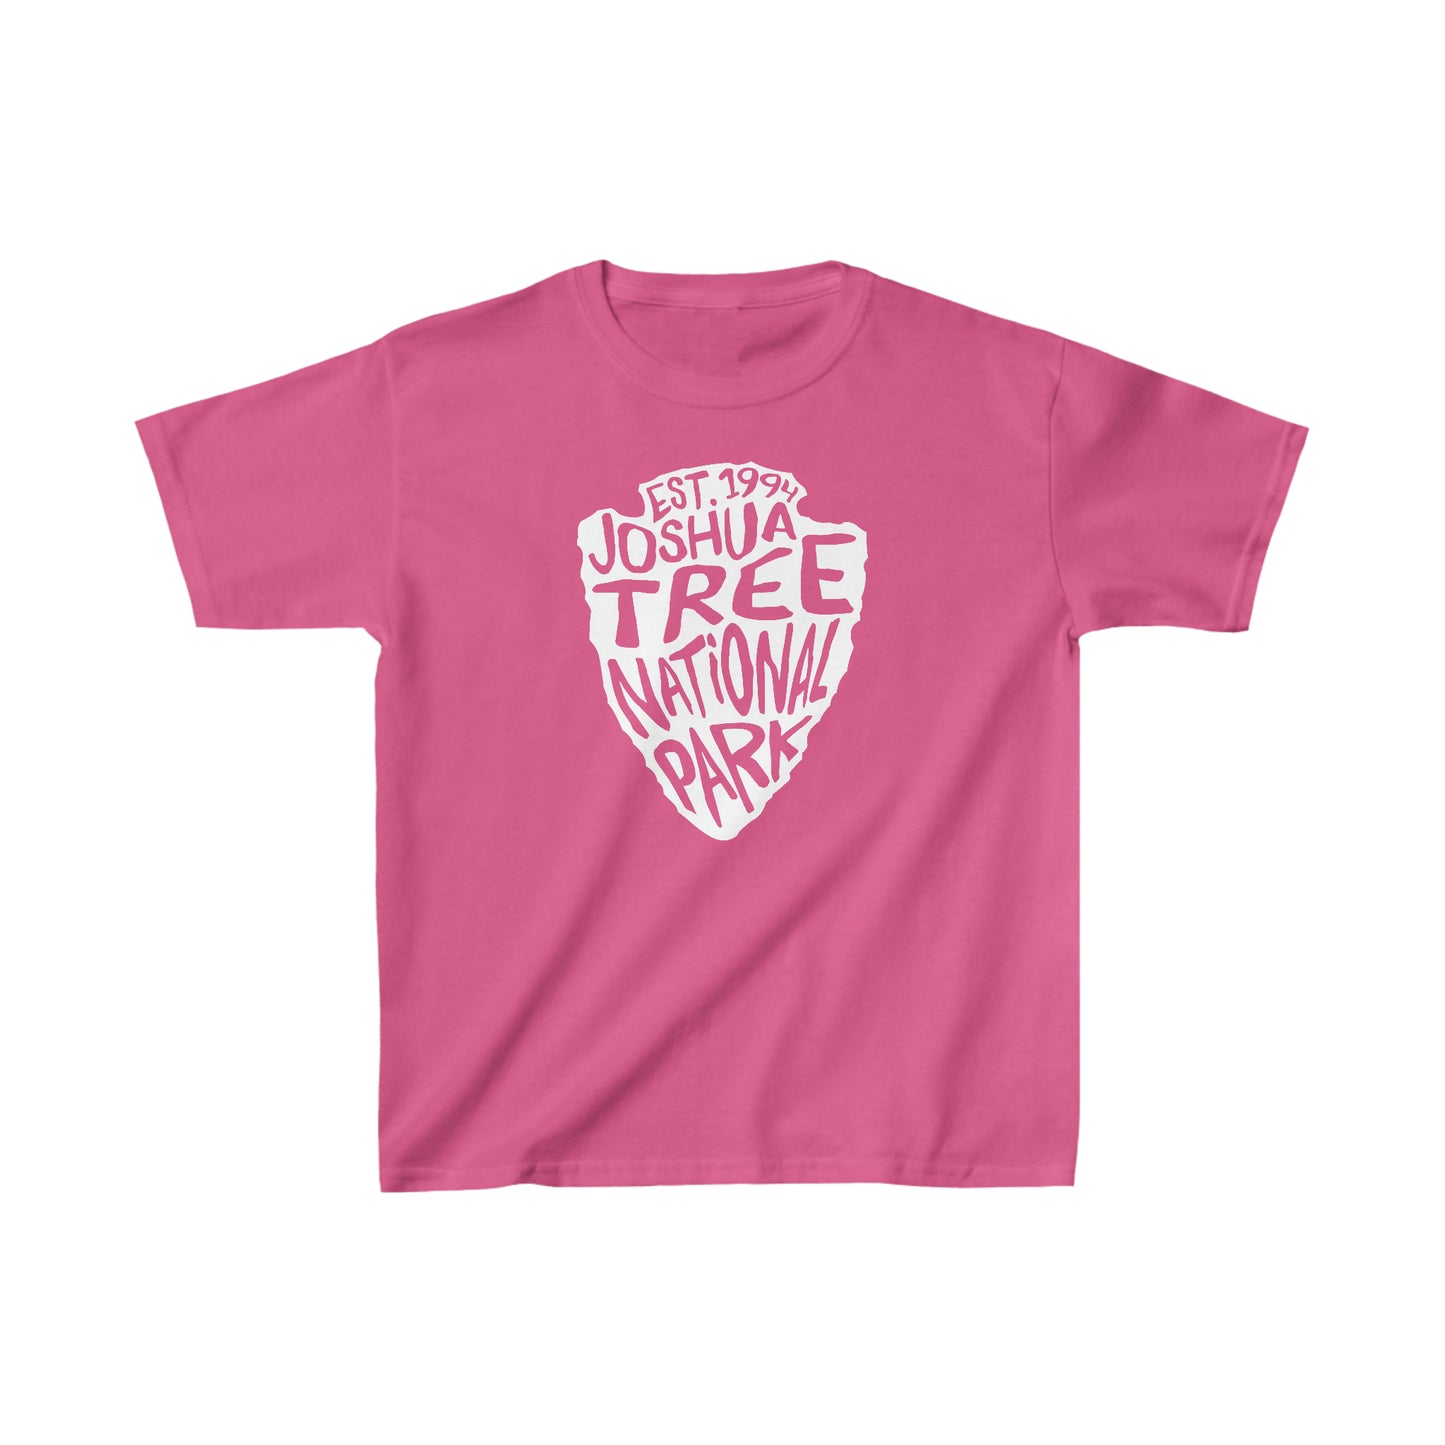 Joshua Tree National Park Child T-Shirt - Arrowhead Design